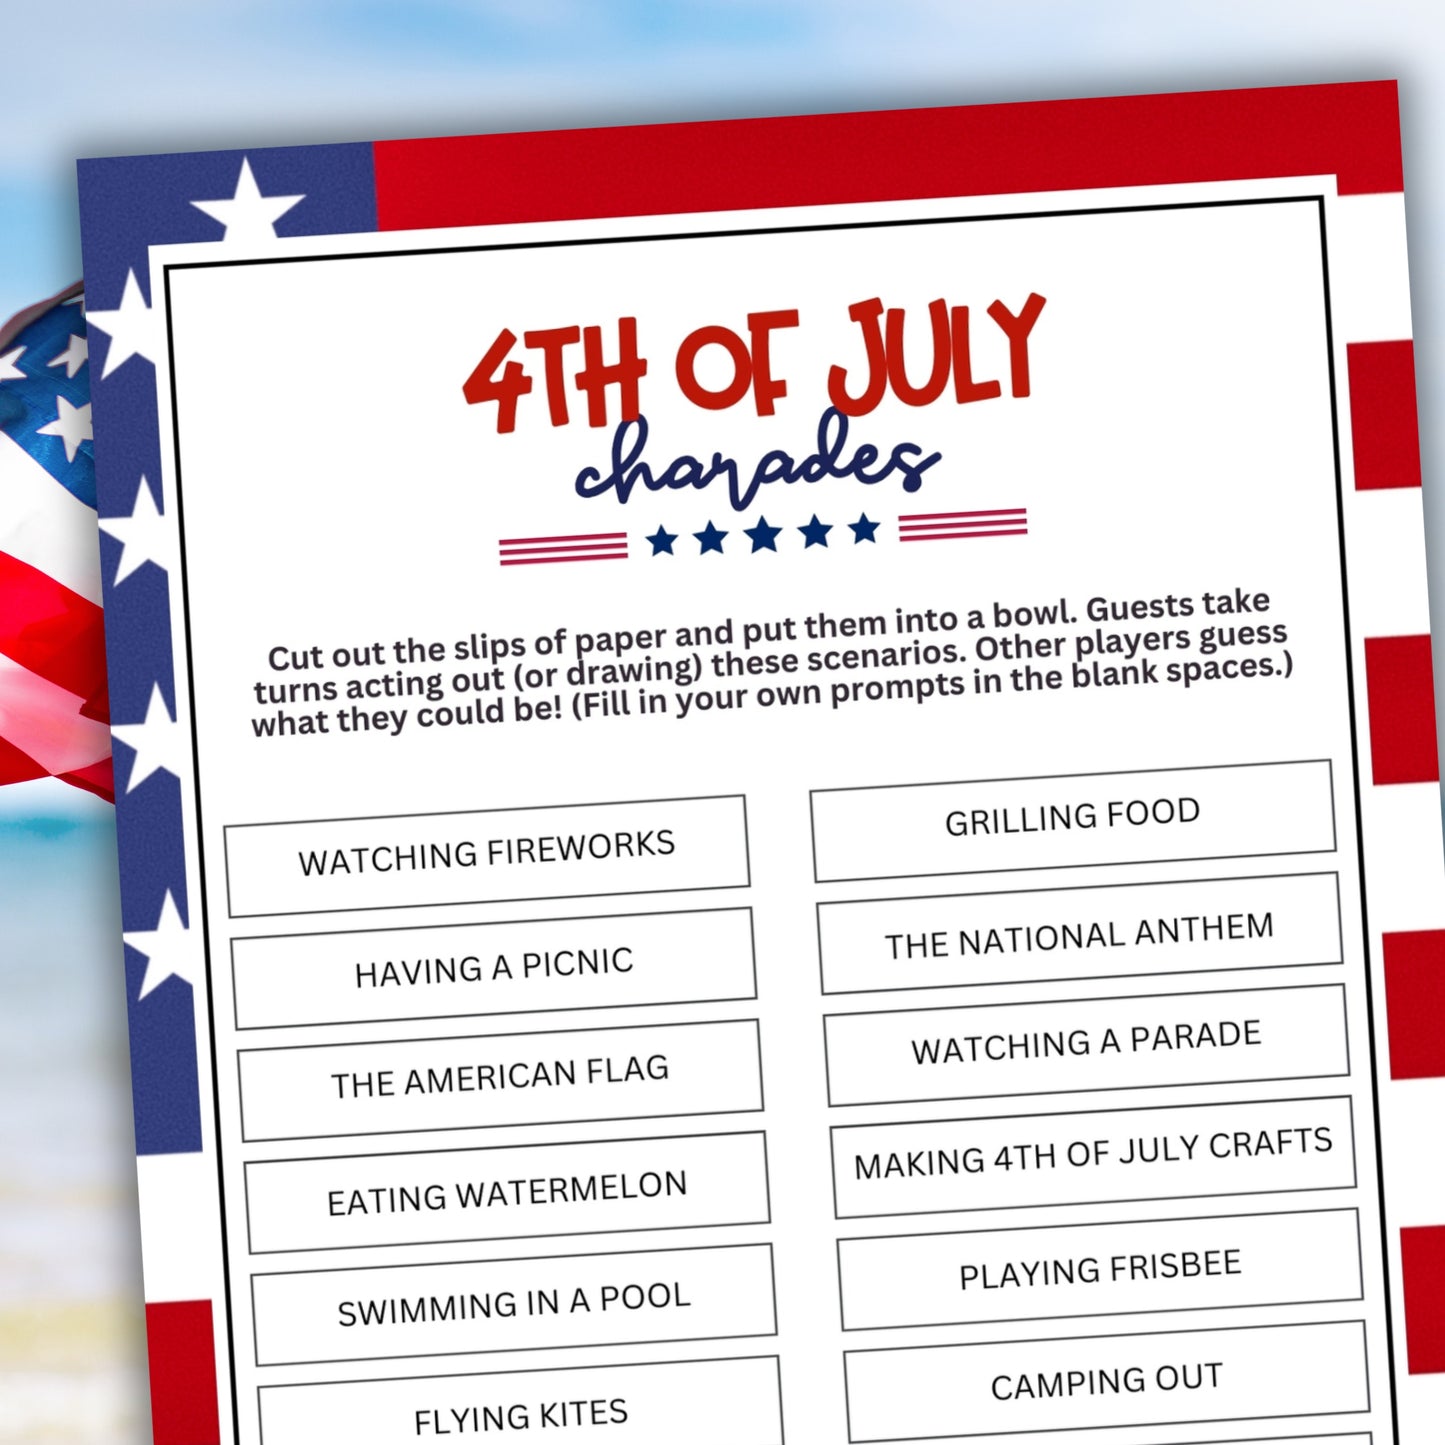 fourrth of july patriotic cummer charades